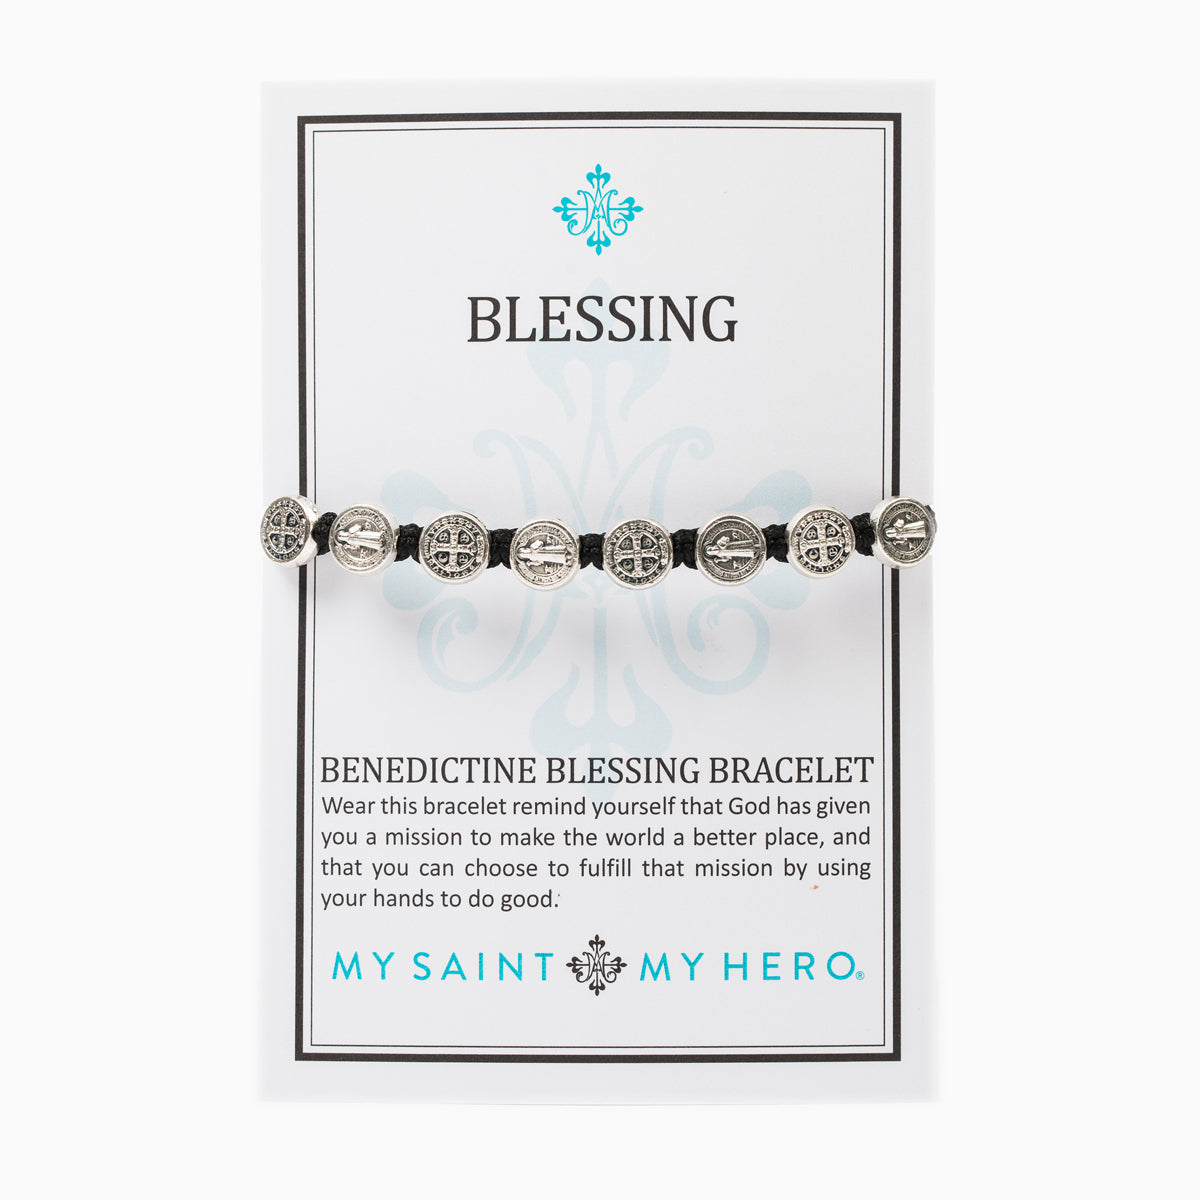 Benedictine Blessing Bracelet - Silver Medals